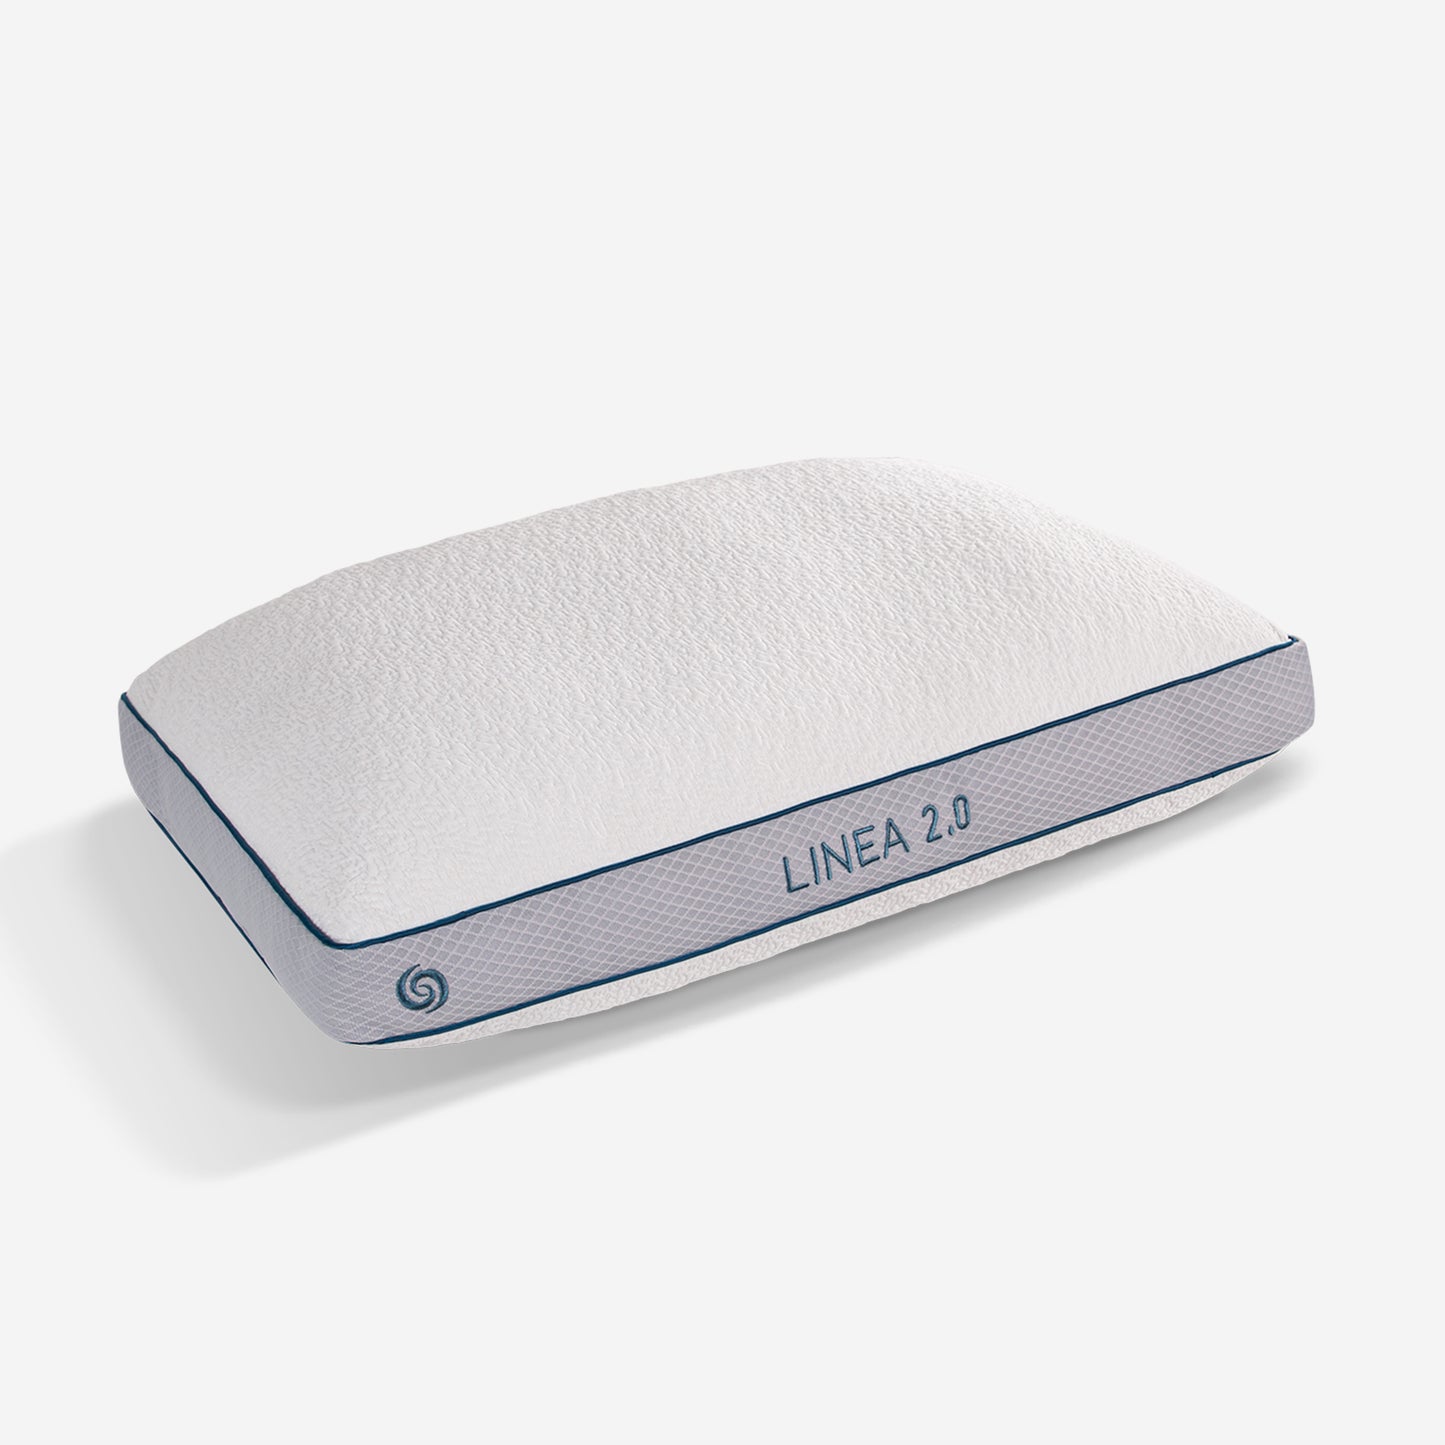 Bedgear Linea 2.0 Back Sleeper Pillow